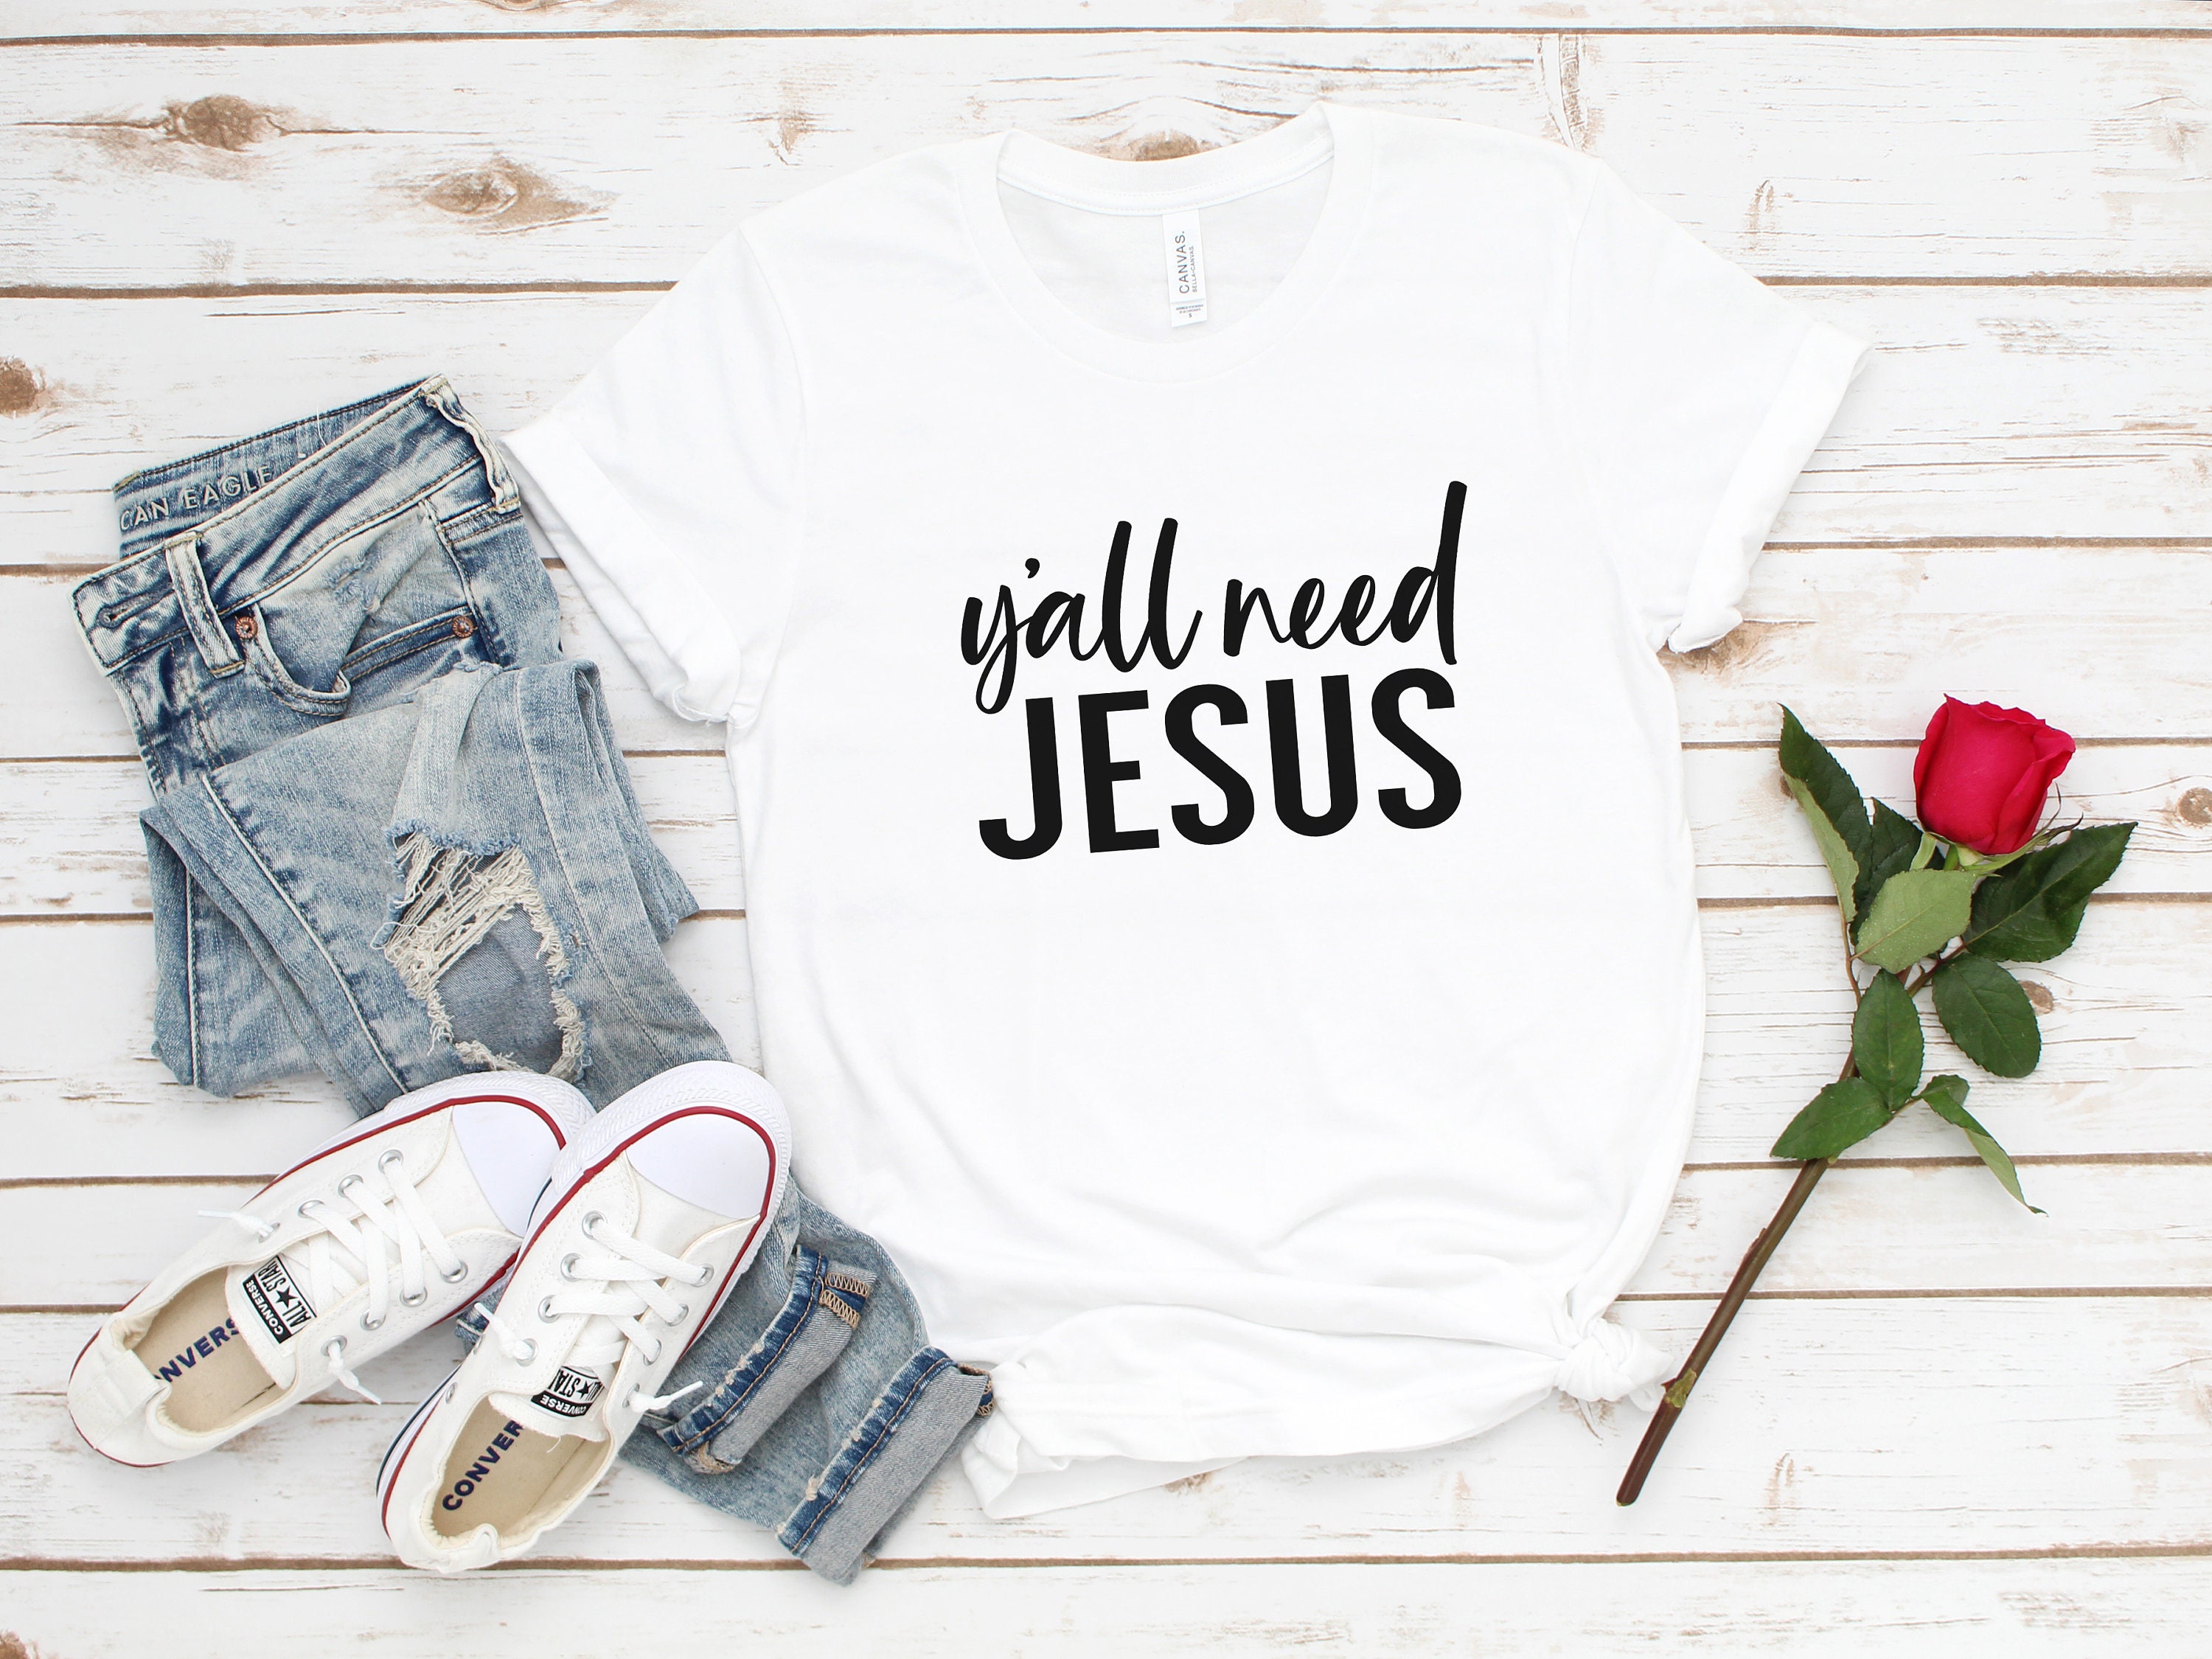 T-Shirt Jesus Simplifica